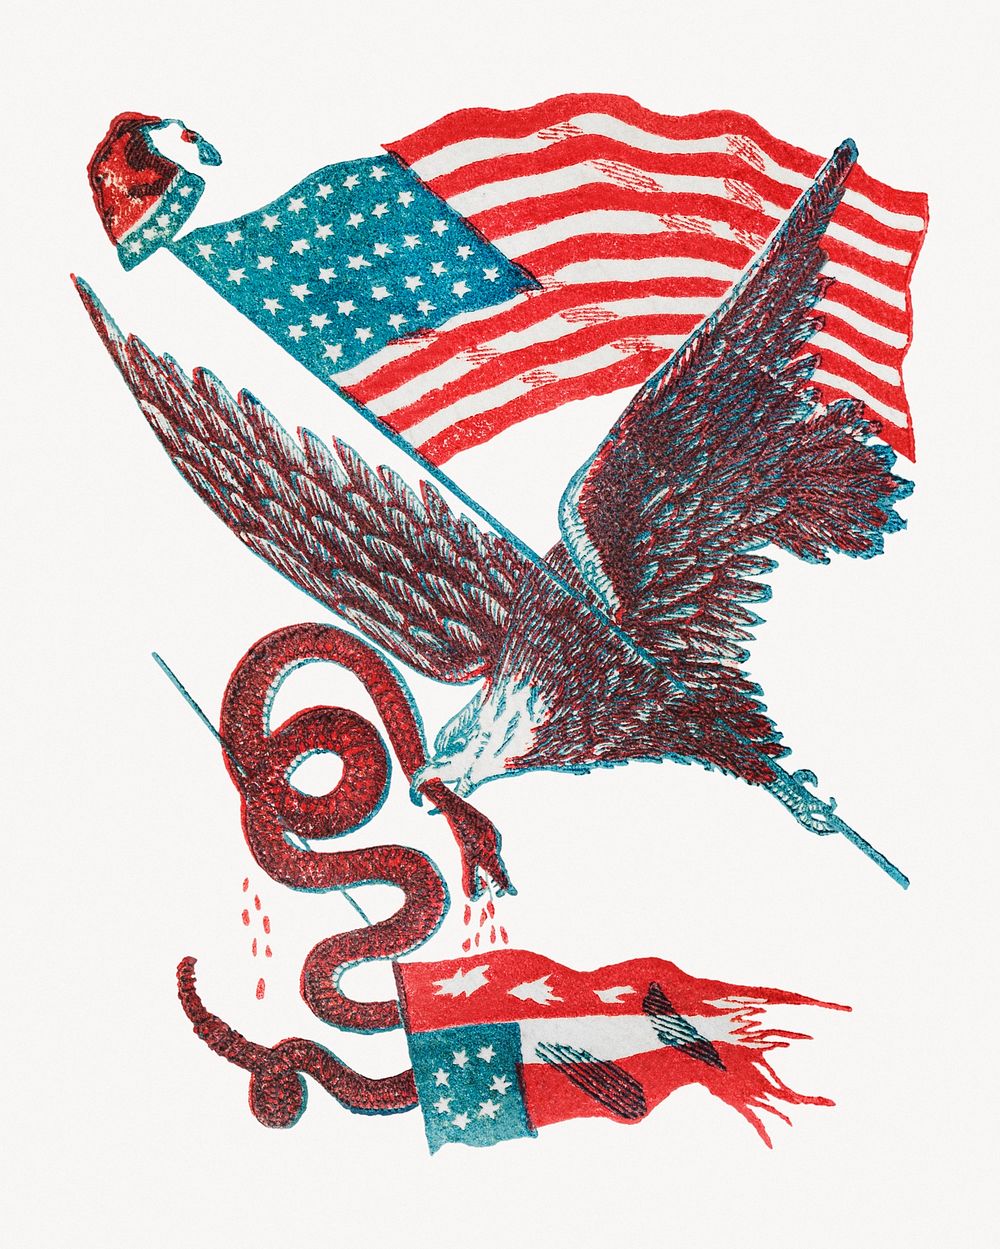 Vintage eagle carrying an American flag illustration